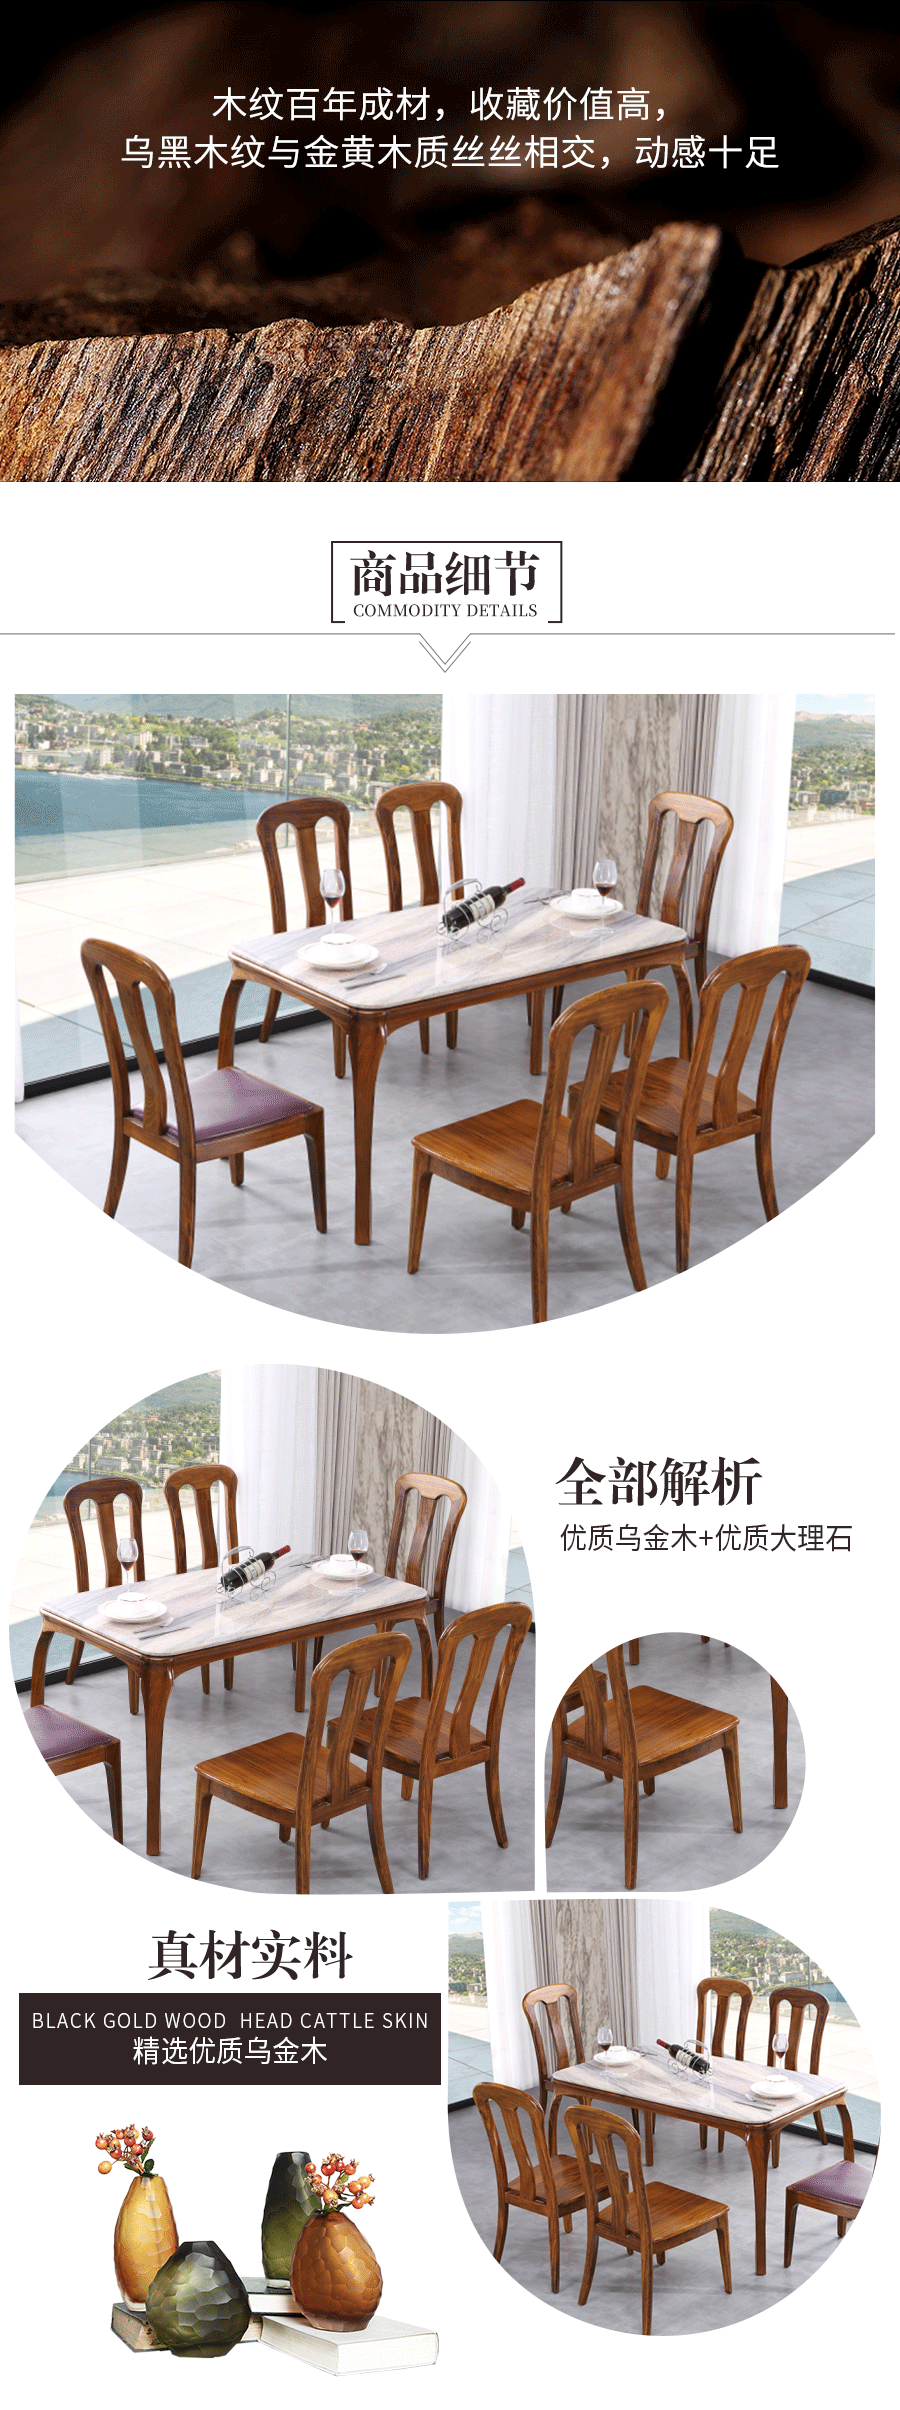 KT901餐厅+KY606餐椅_02